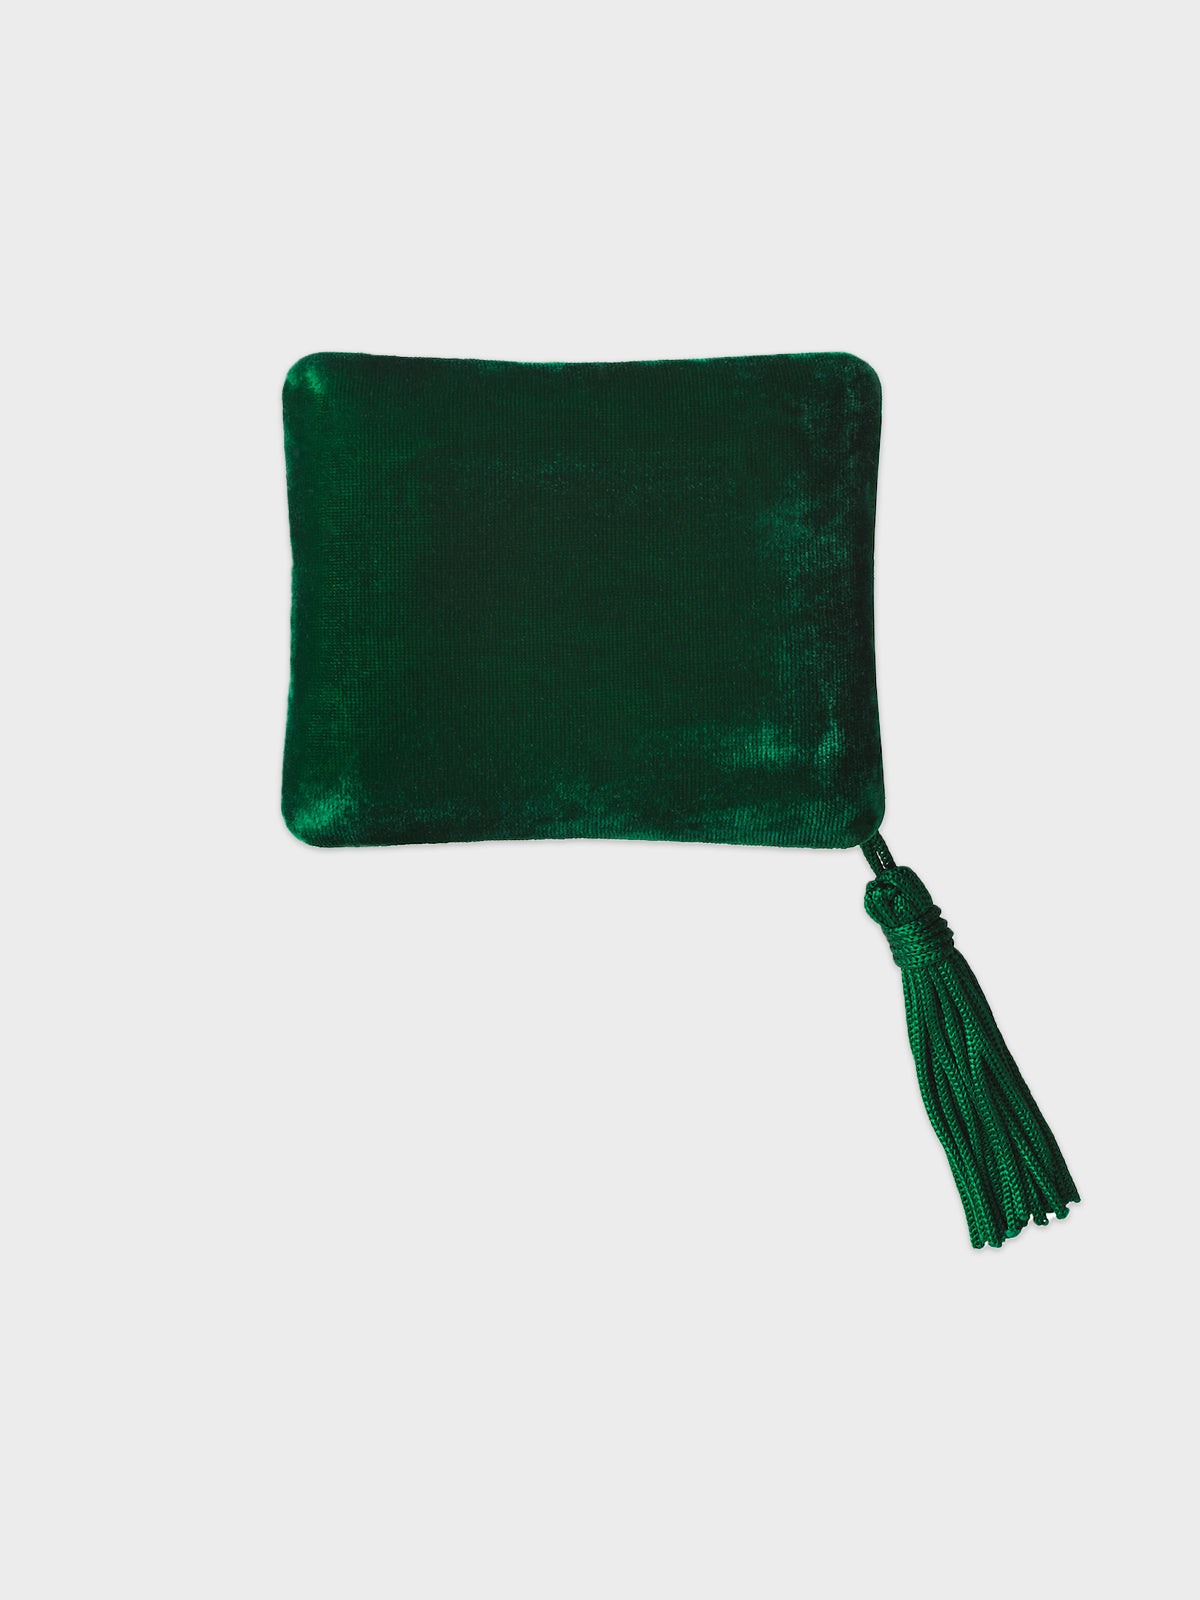 Sophie Bille Brahe - Velvet Jewelry Box in Emerald Green